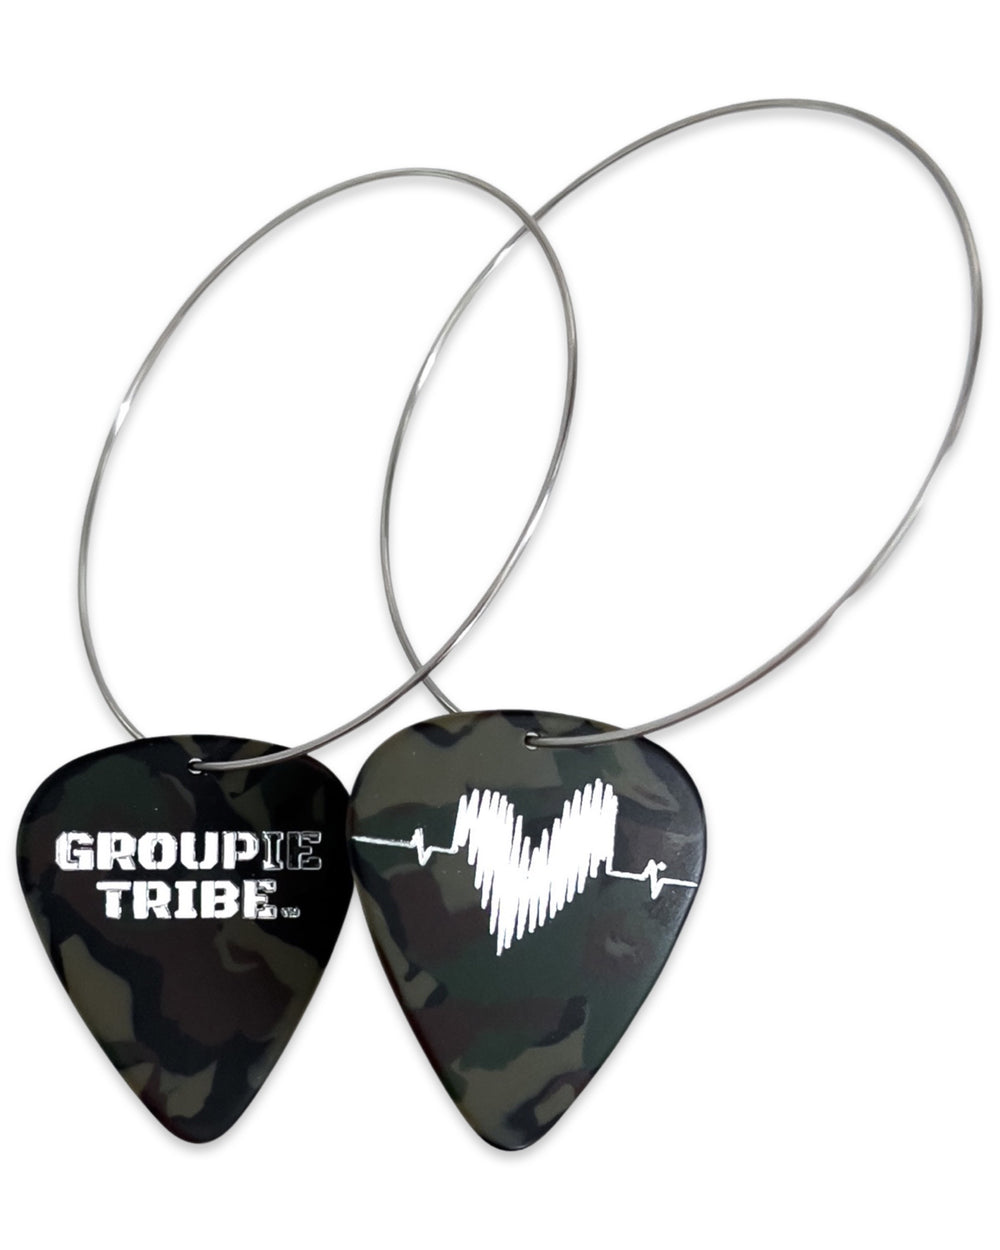 WS Groupie Tribe Camo Reversible Single Guitar Pick Earrings